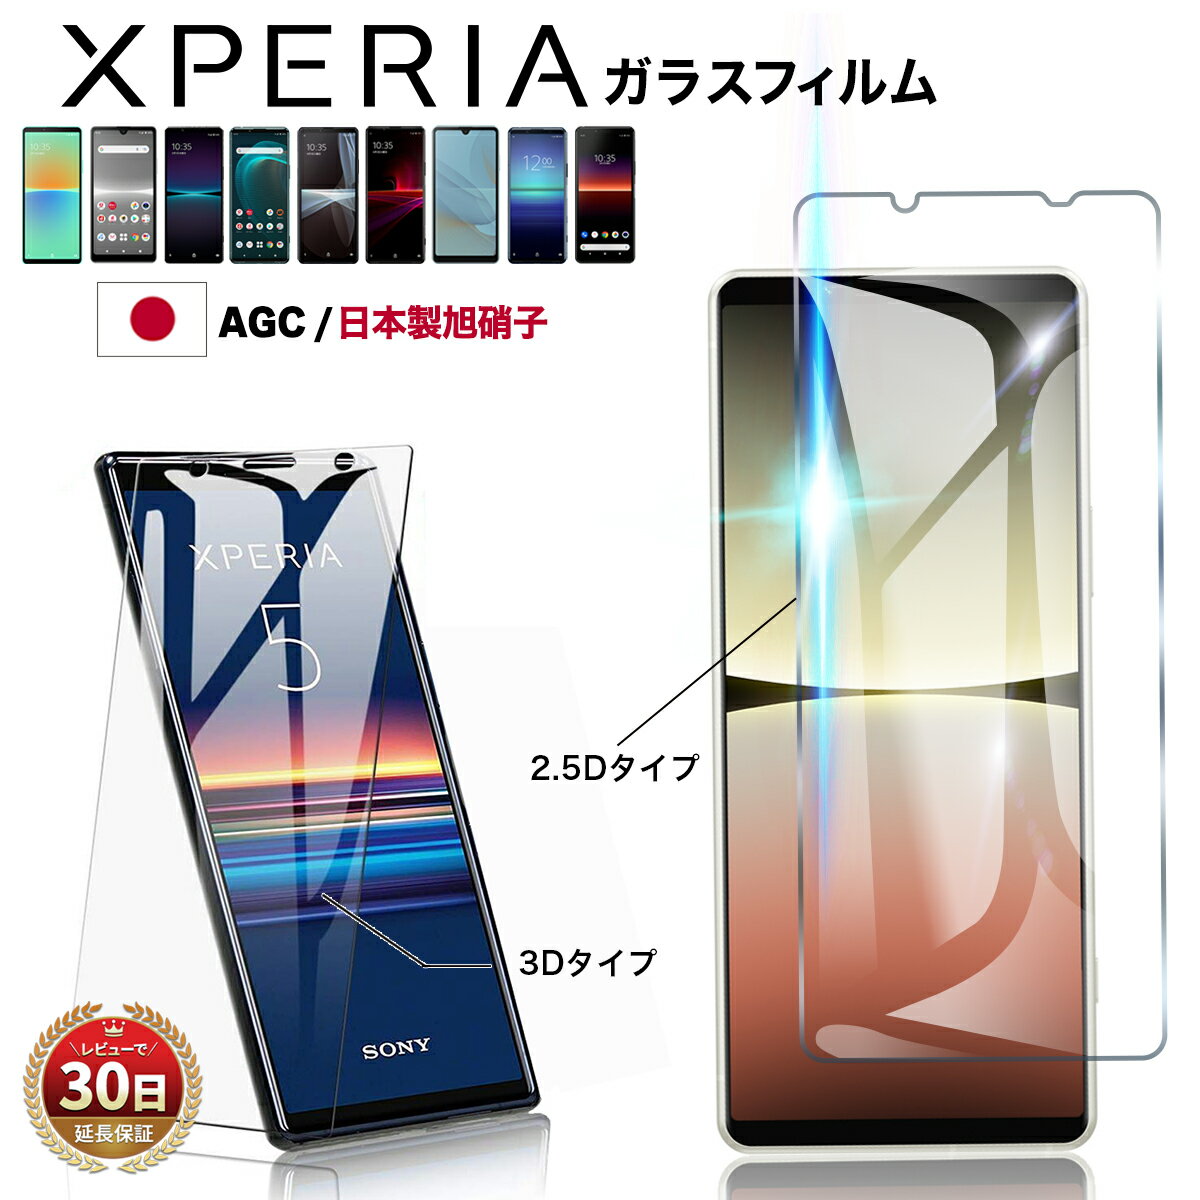 Xperia 5 V10 V ガラスフィルム 1 VI 10 VI 